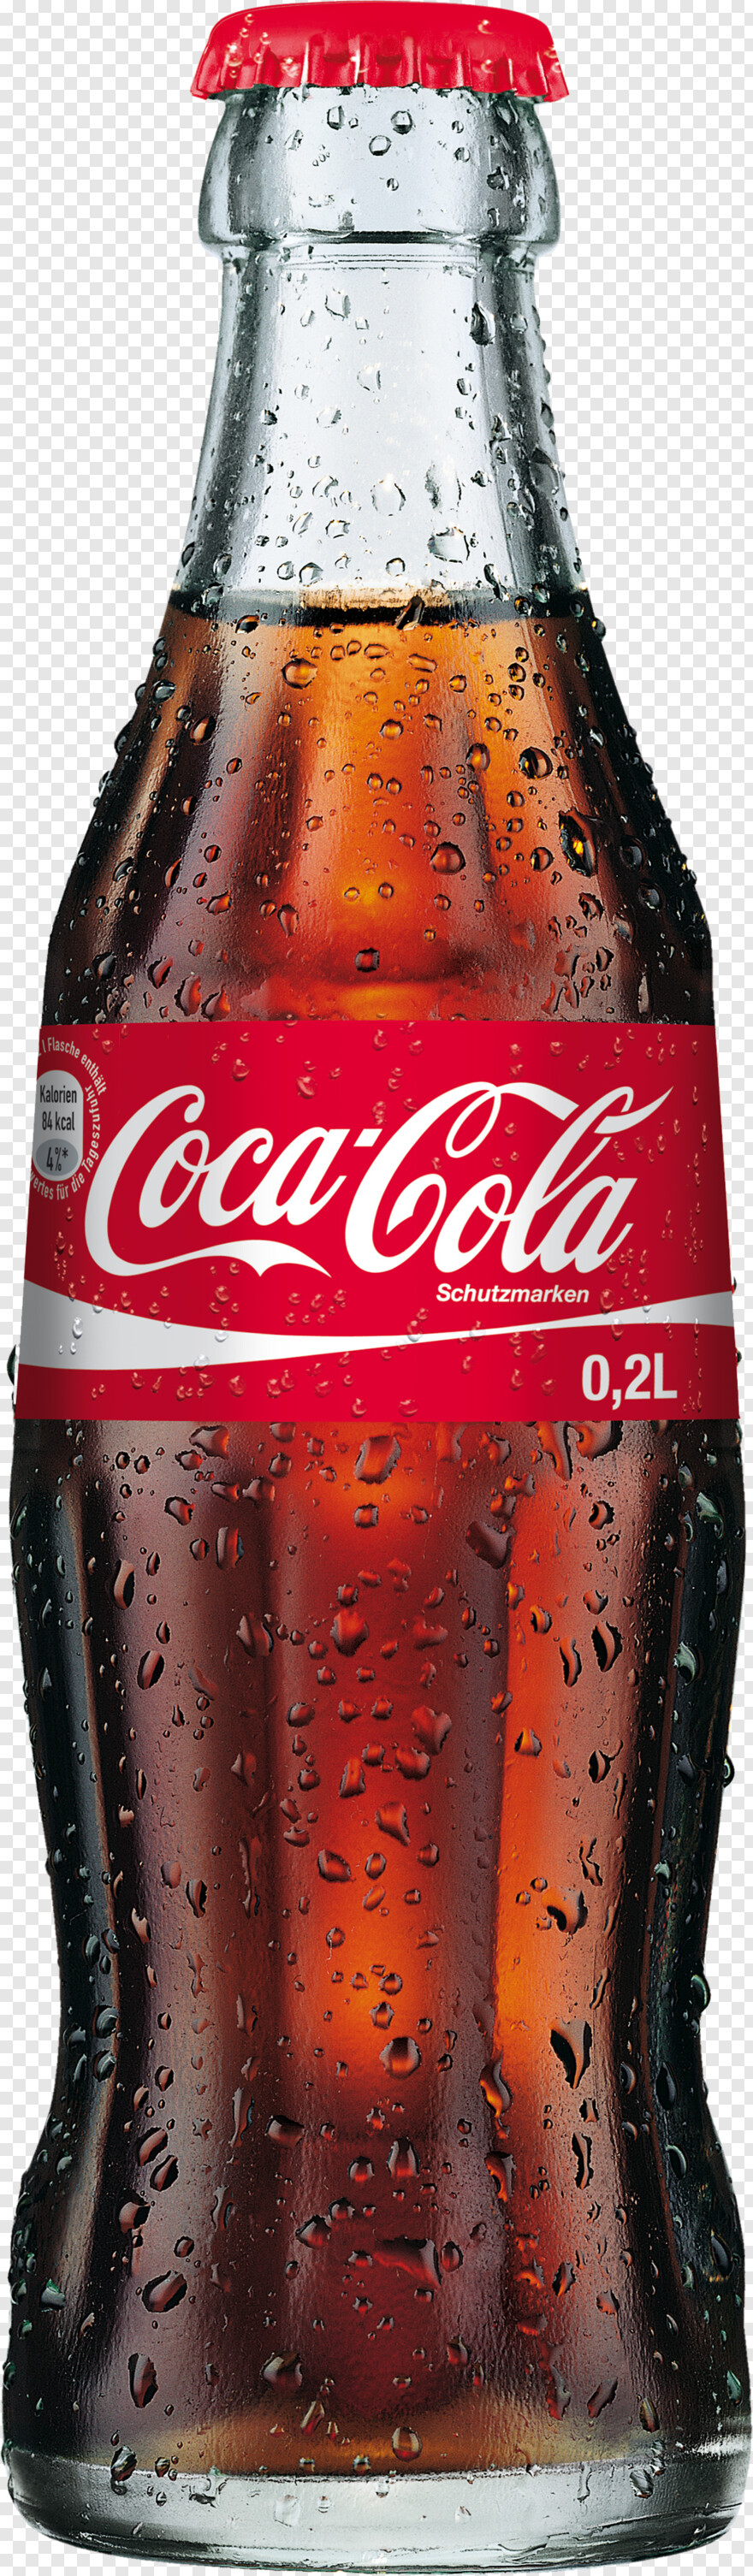 coca-cola-logo # 326641